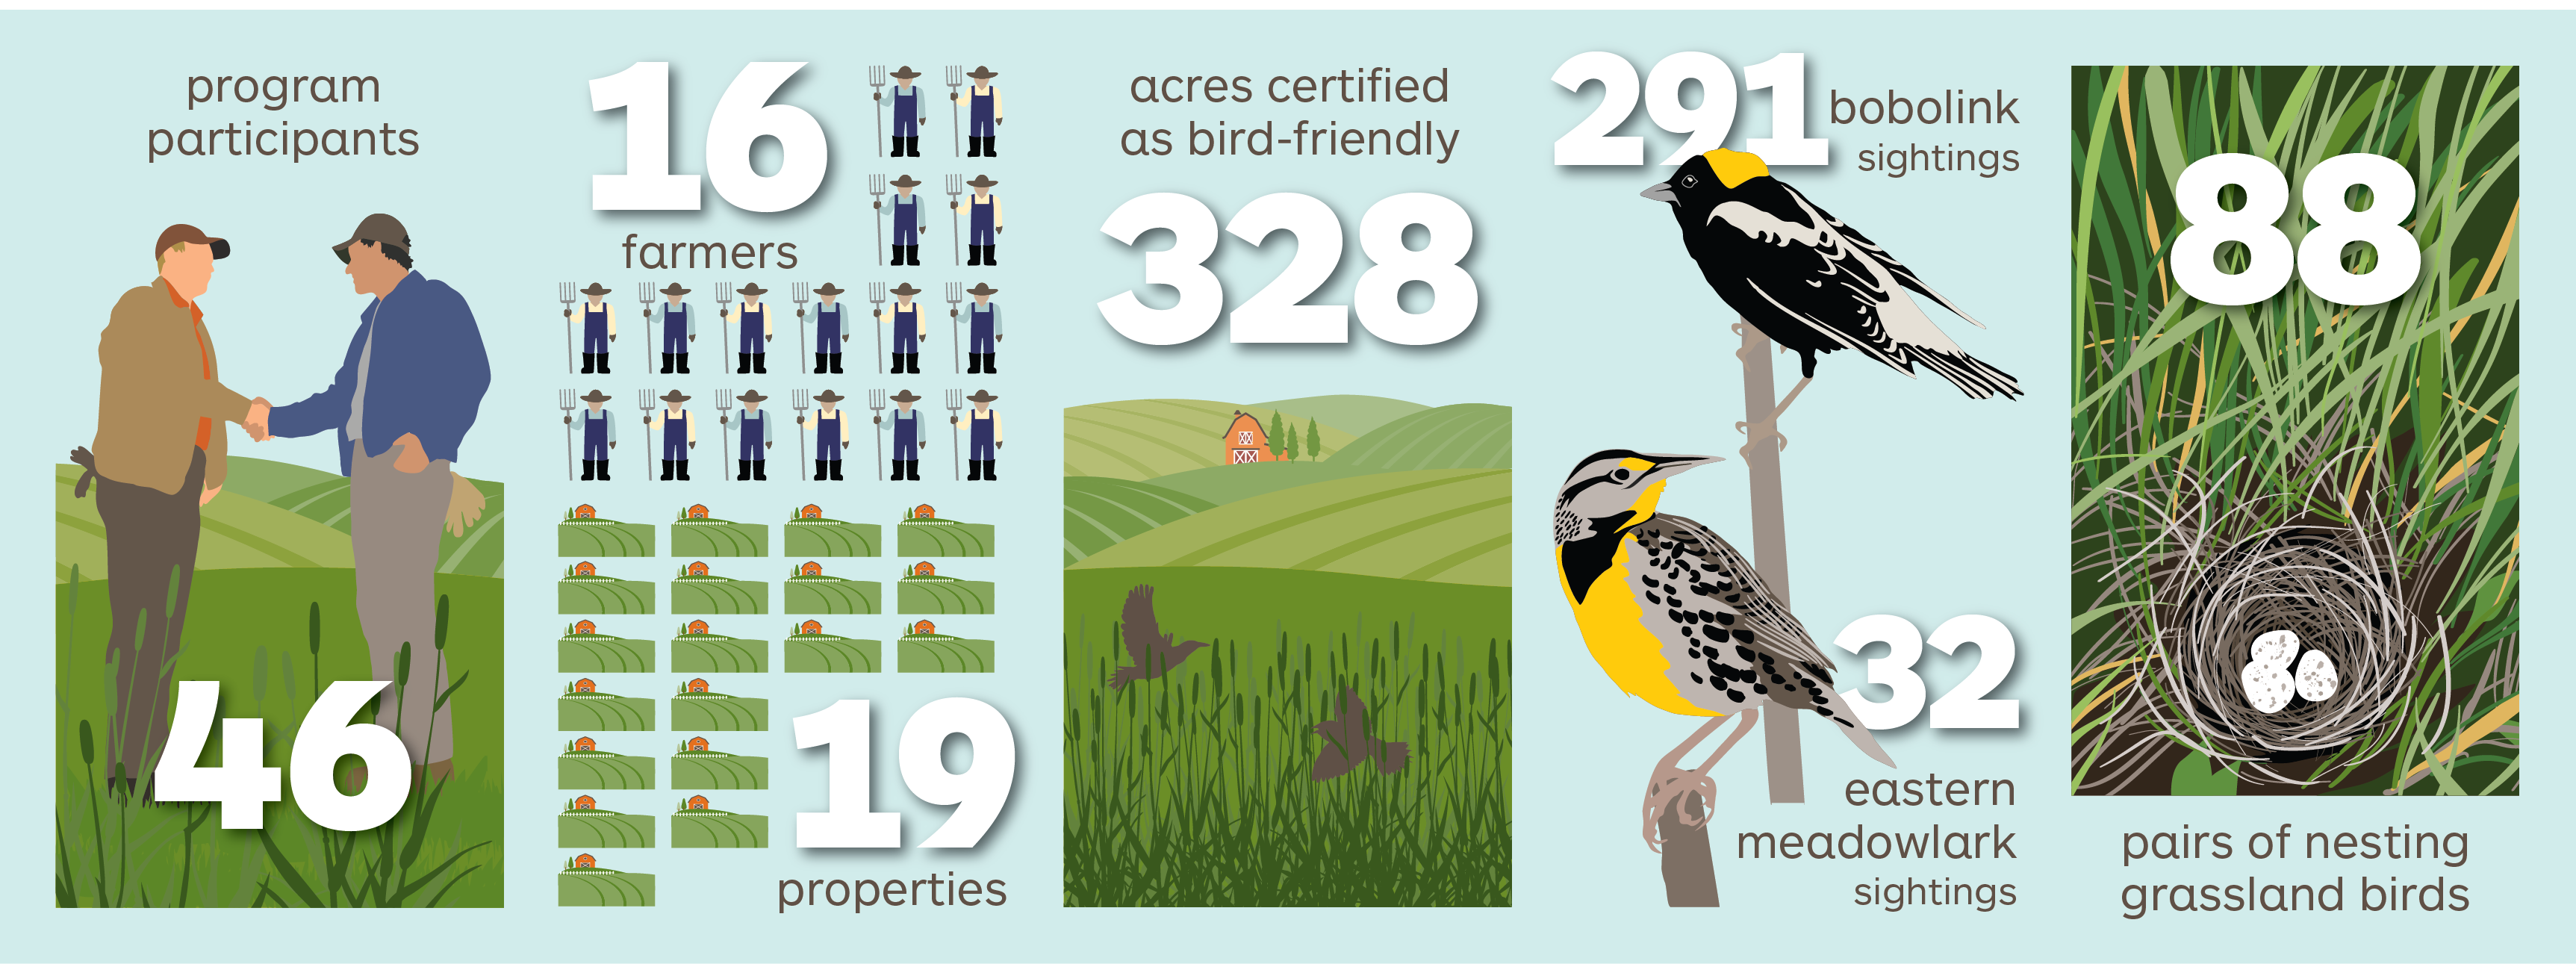 Bird Friendly certified Hay 2020 Accomplishments